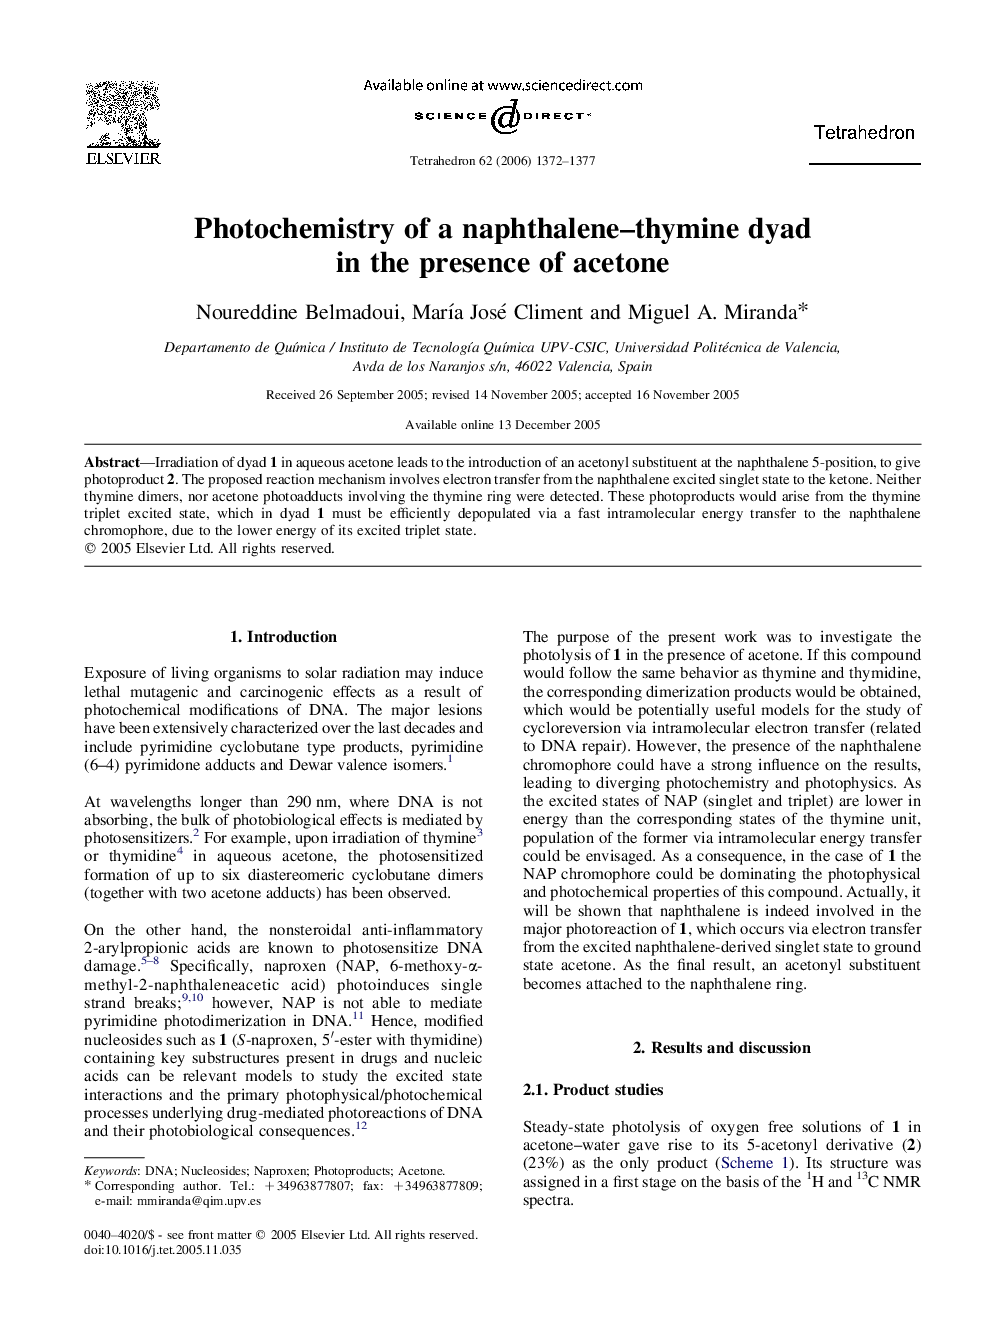 Photochemistry of a naphthalene-thymine dyad in the presence of acetone